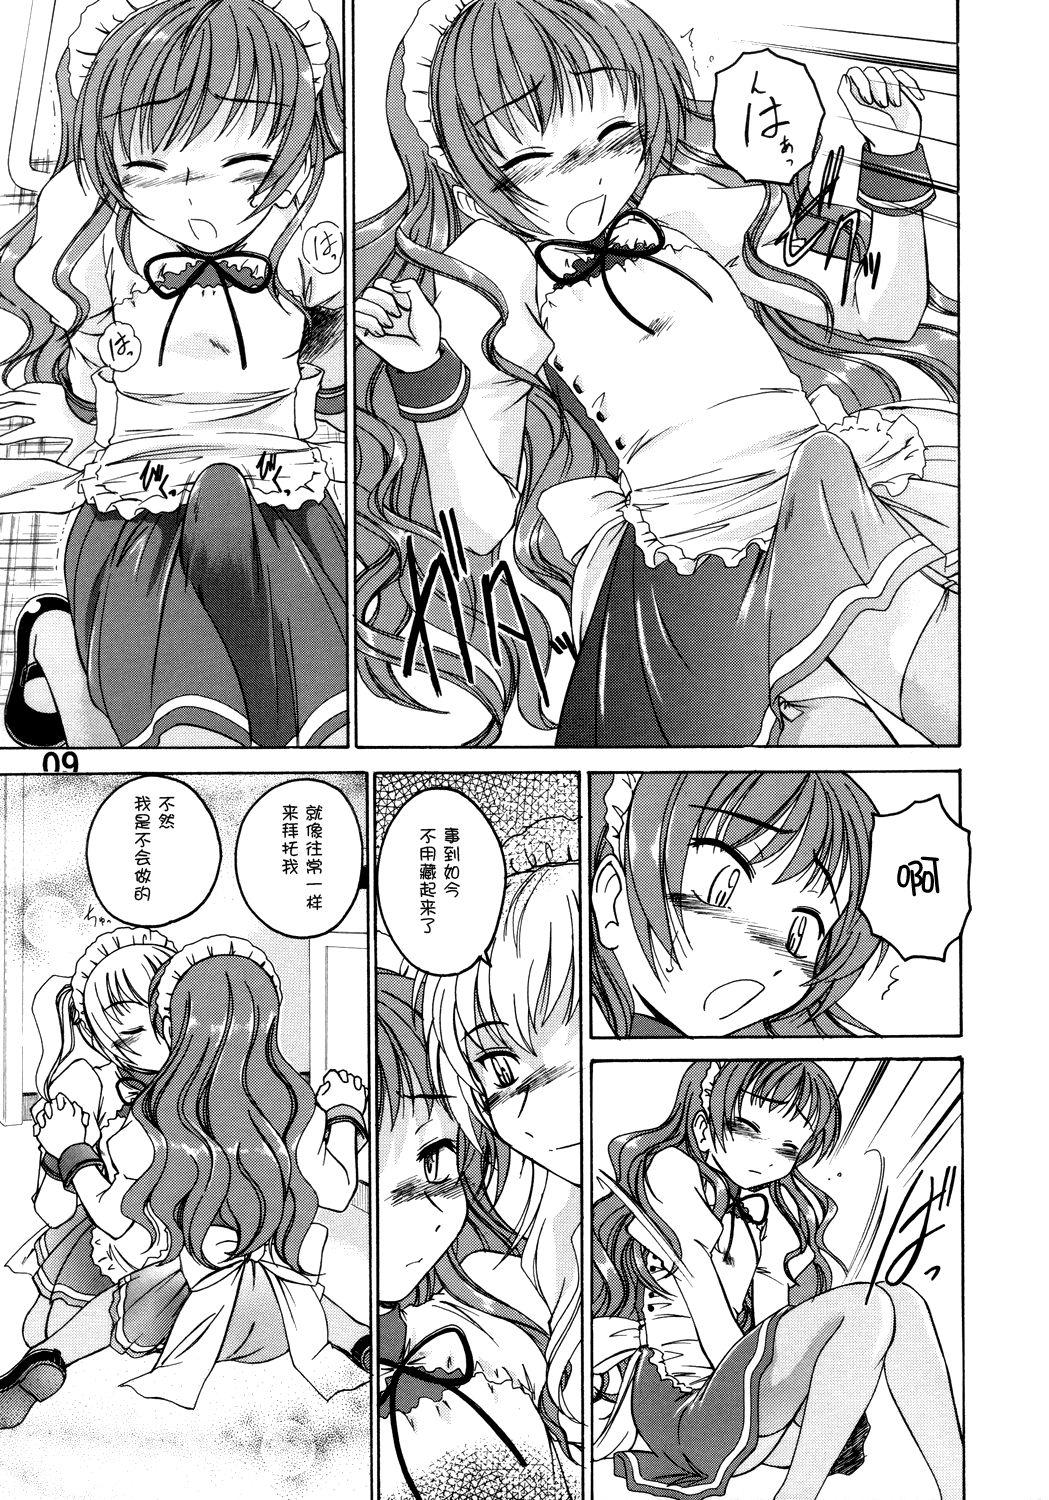 Exhib Manga Sangyou Haikibutsu 11 - Comic Industrial Wastes 11 - Princess princess Punish - Page 8